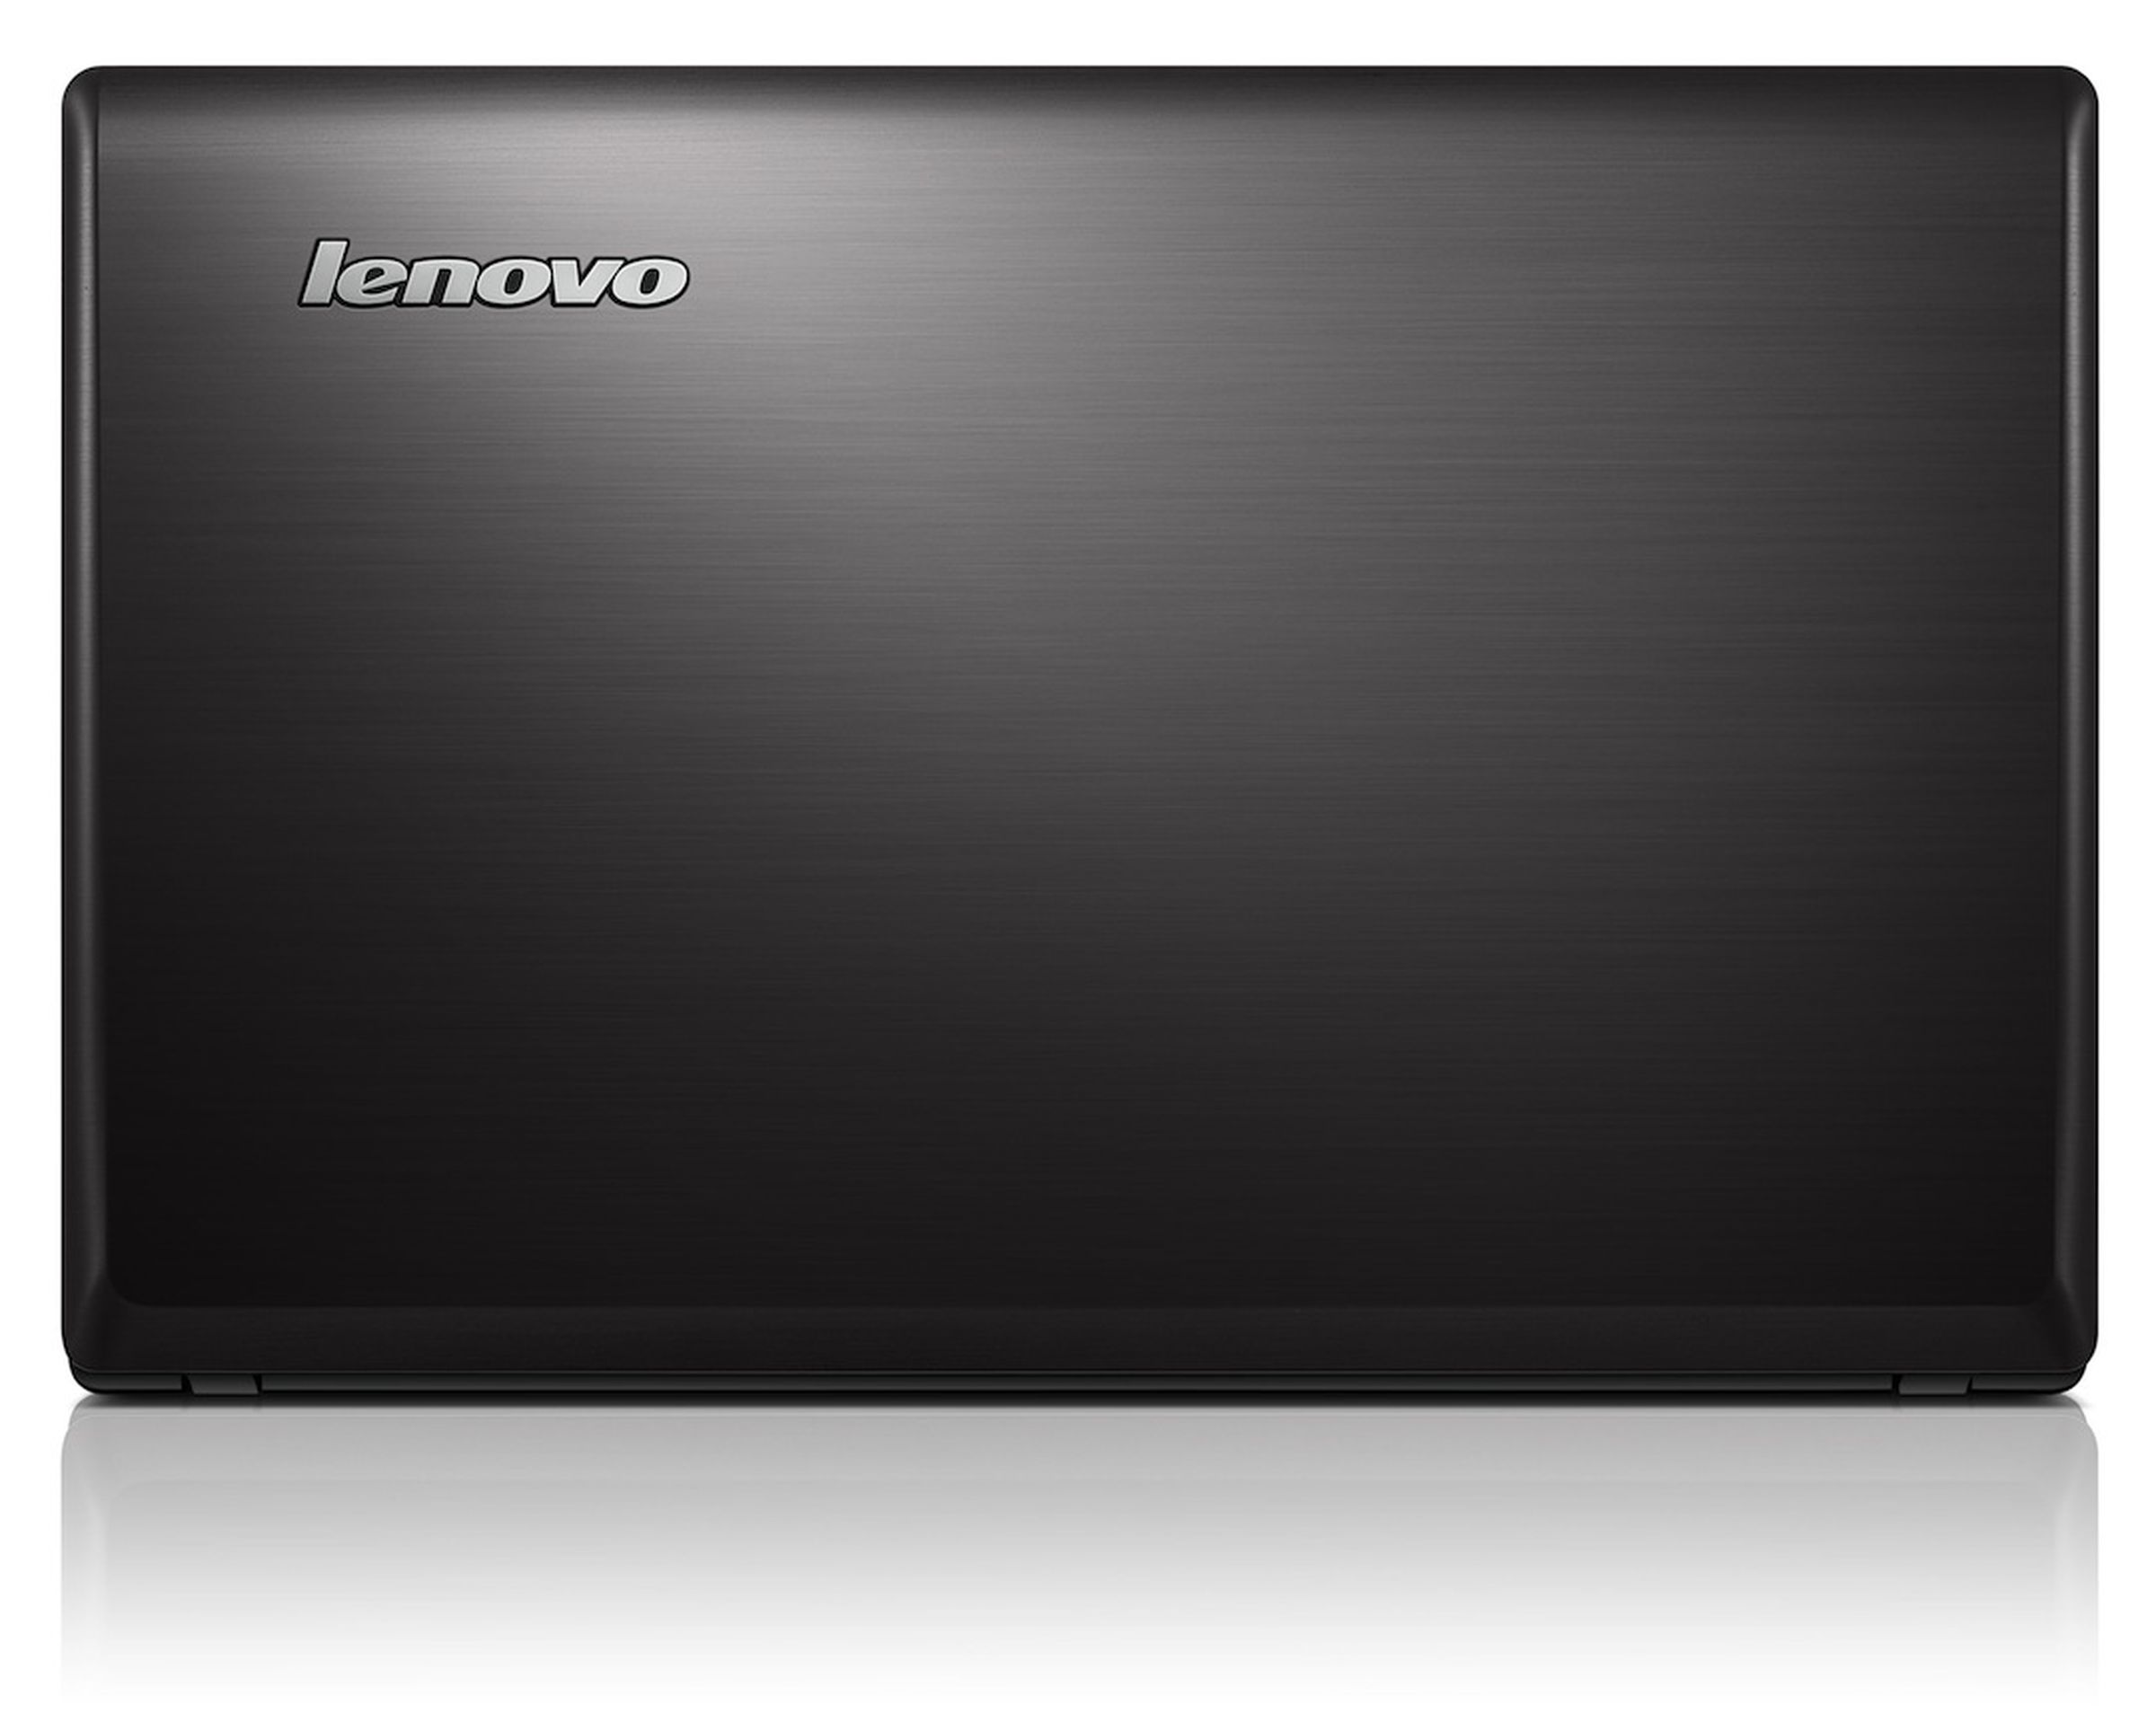 Lenovo IdeaPad G Series press shots